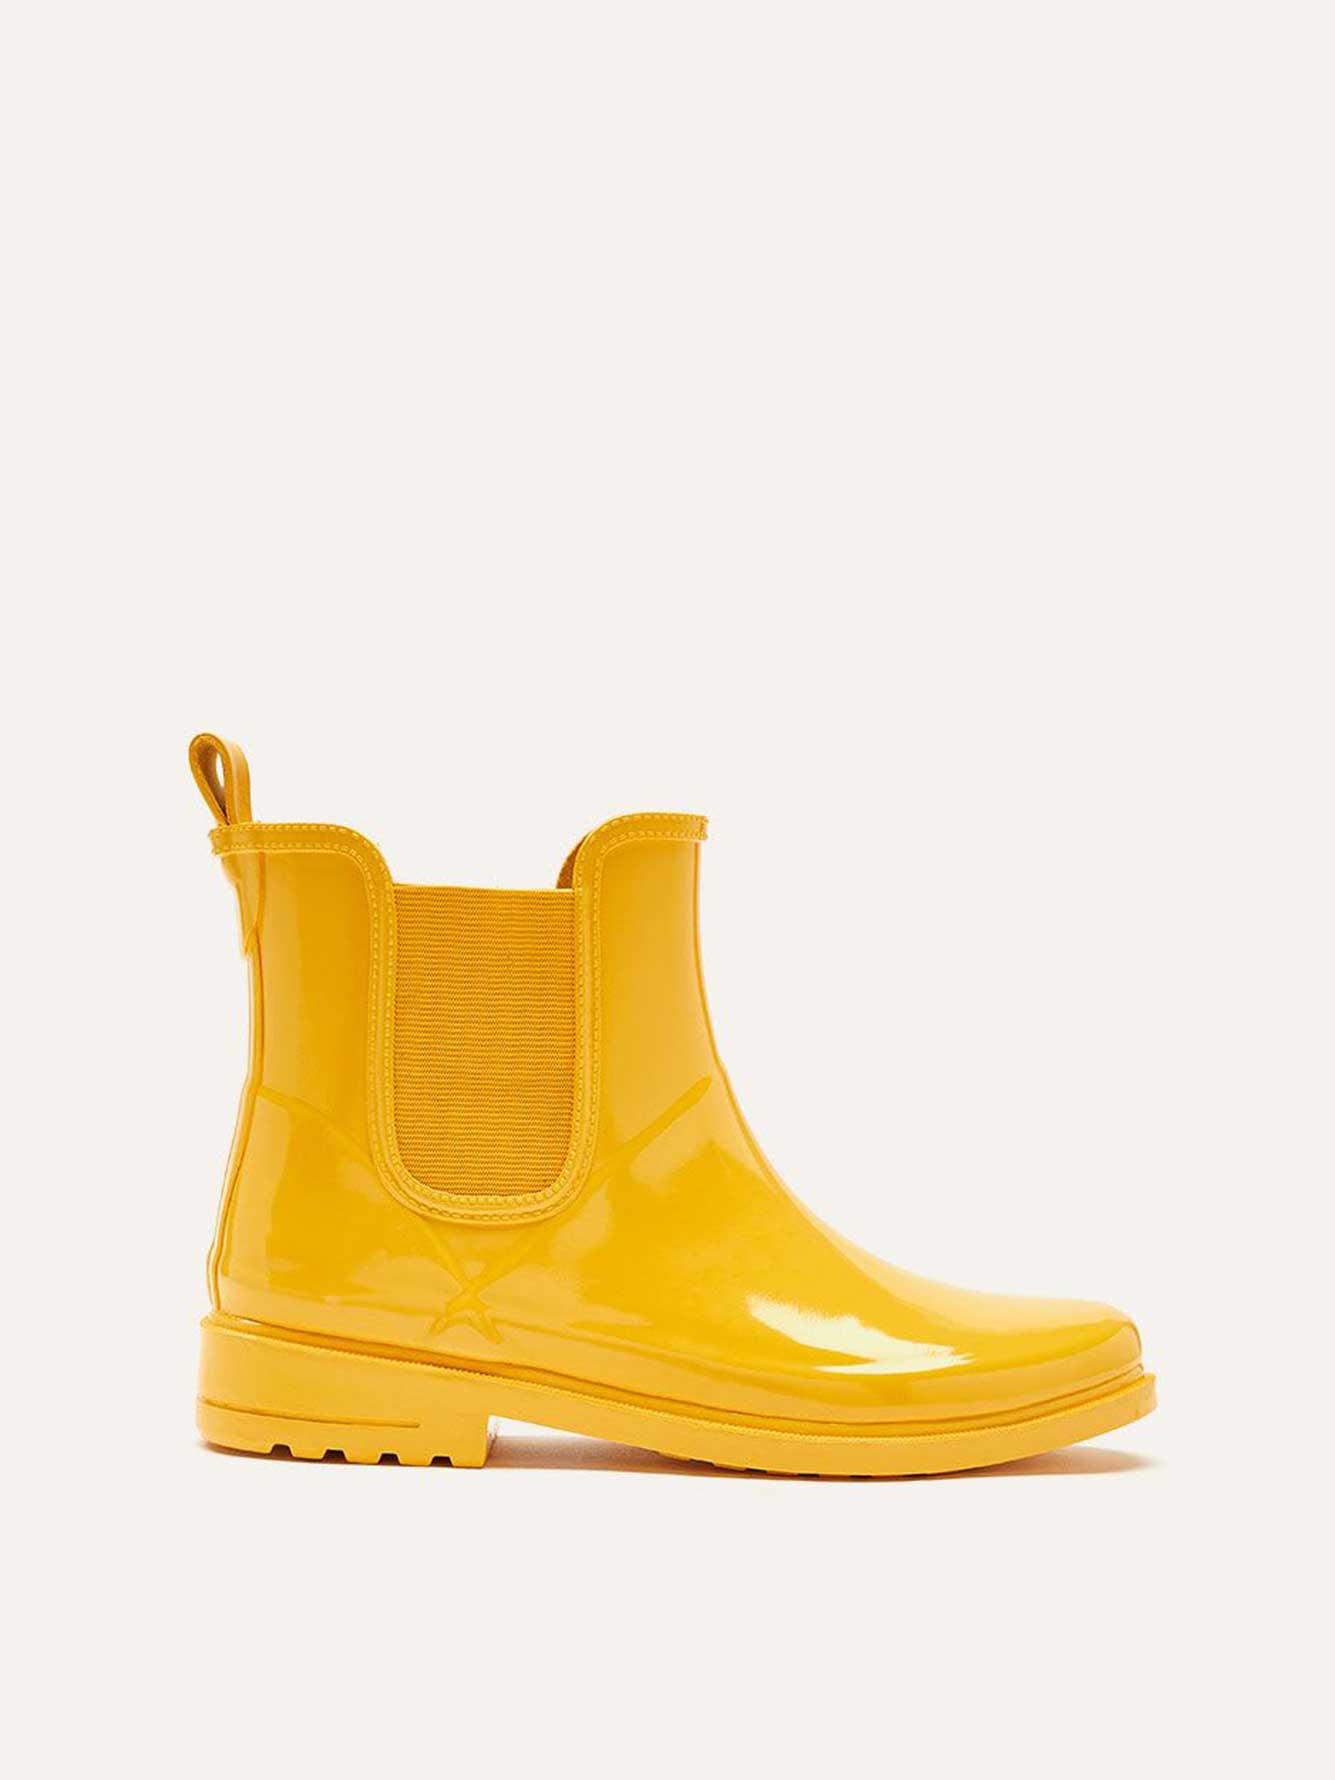 short rain boots